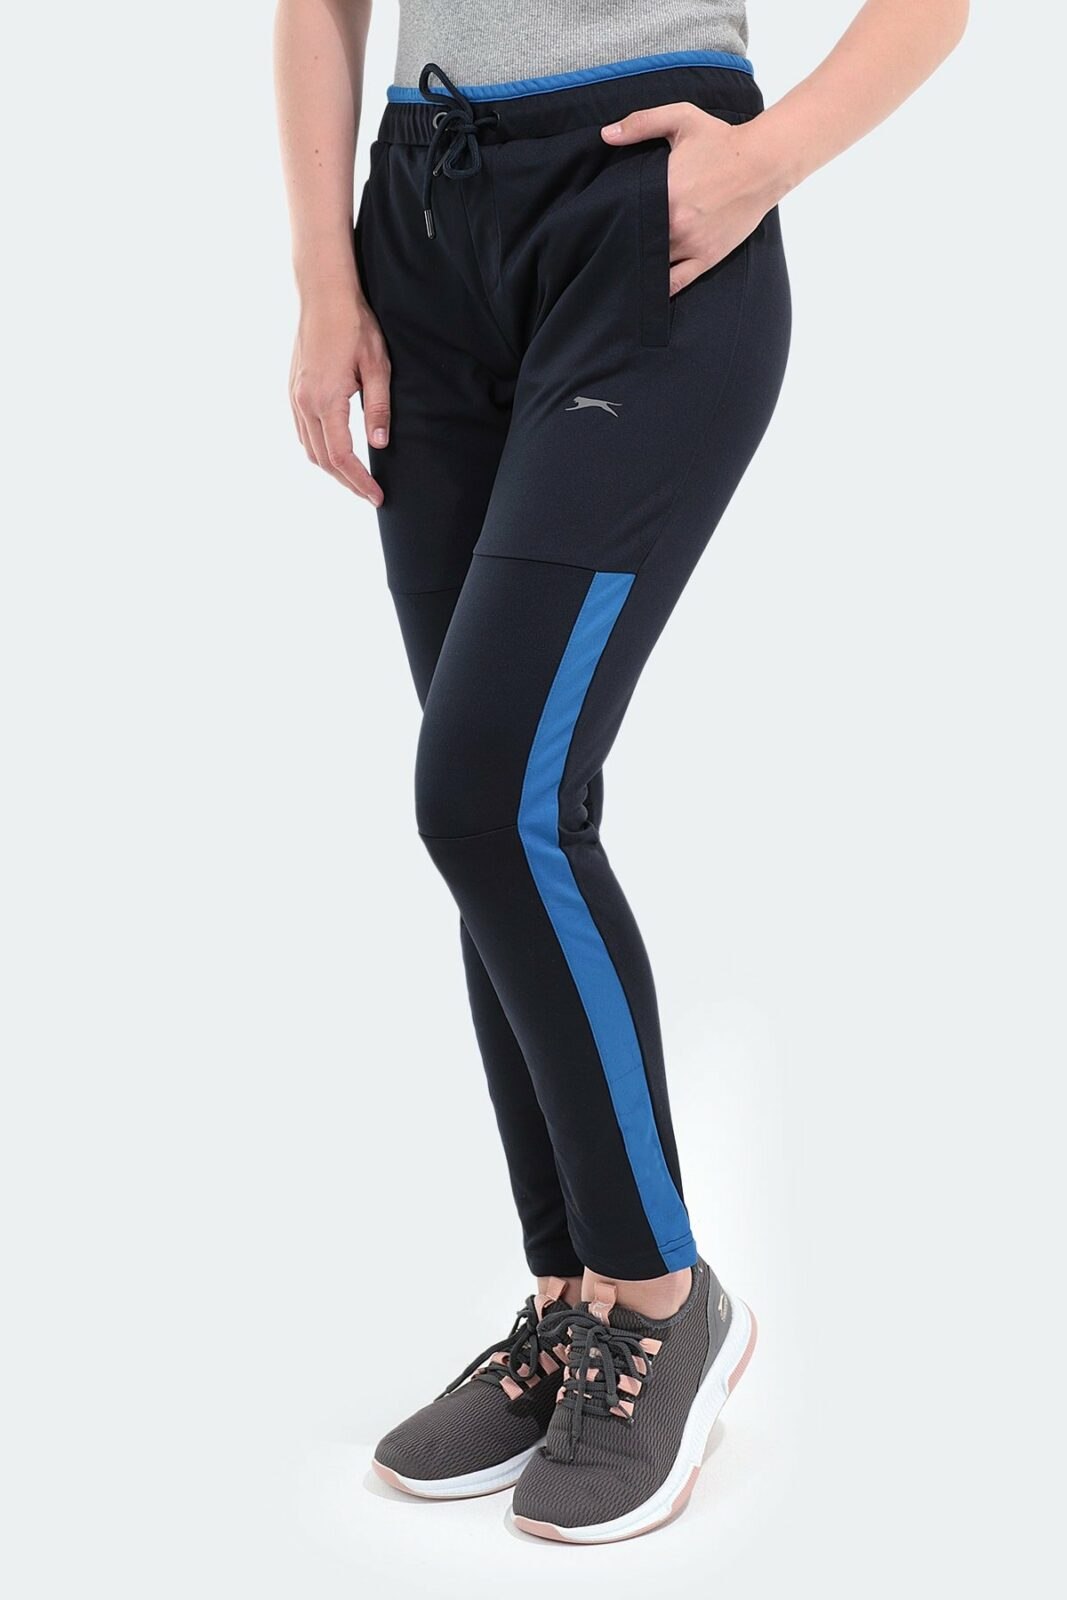 Slazenger Sweatpants - Navy blue